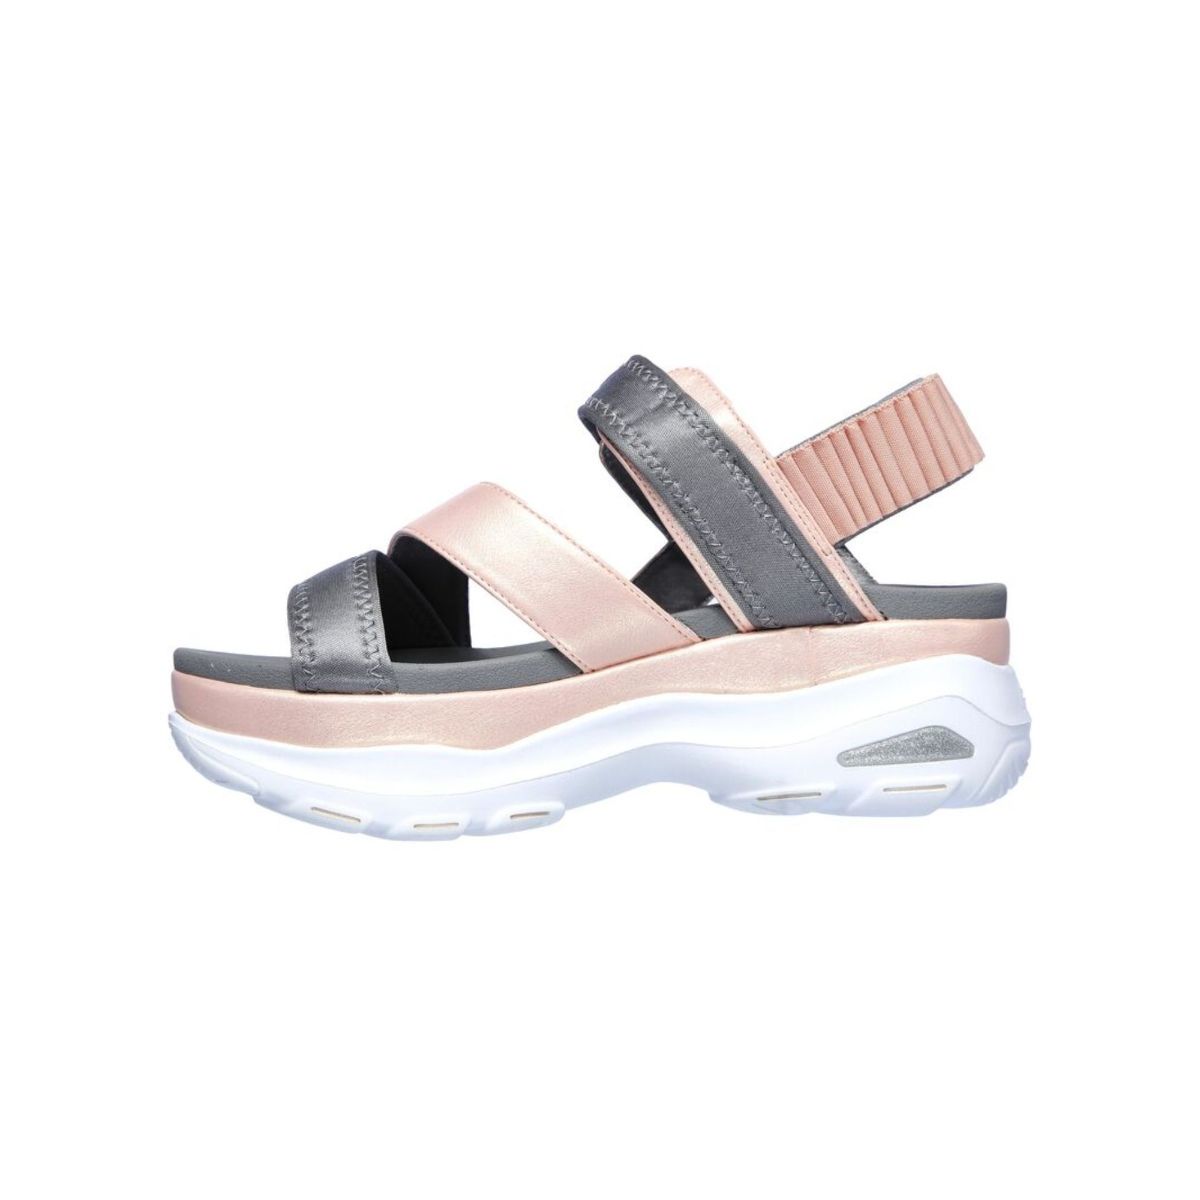 Buy SKECHERS Cloud Ultra - Nova Chick Pink Cali Sandals Online